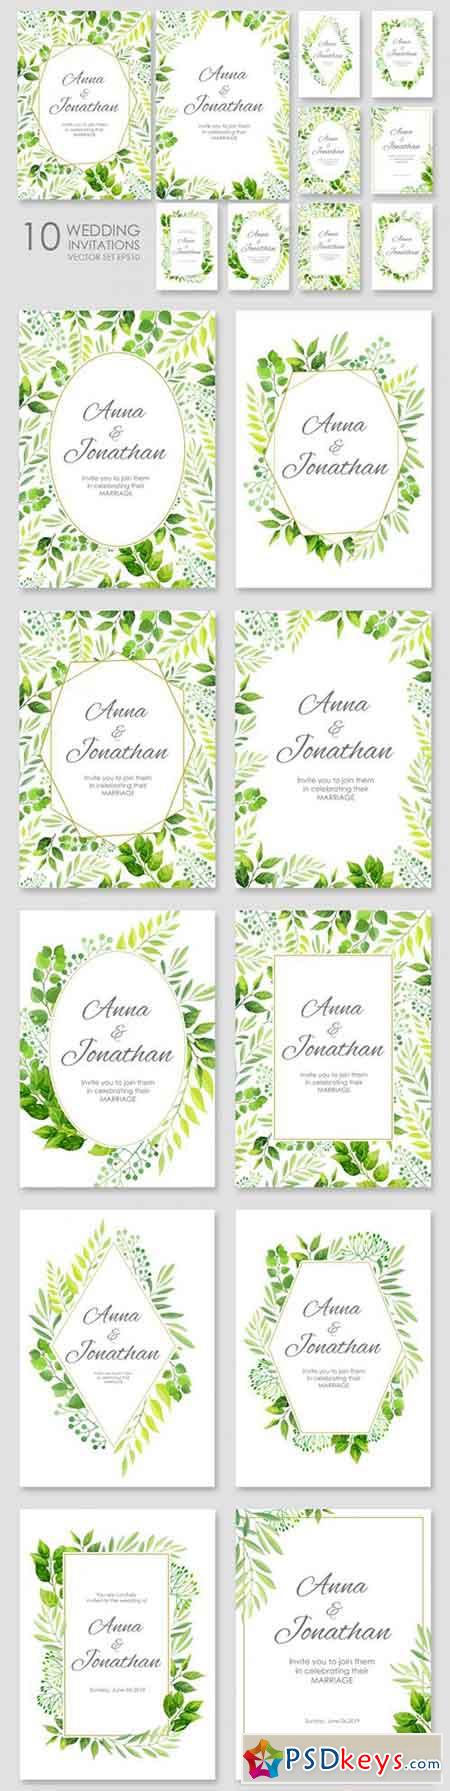 Floral Wedding invitations